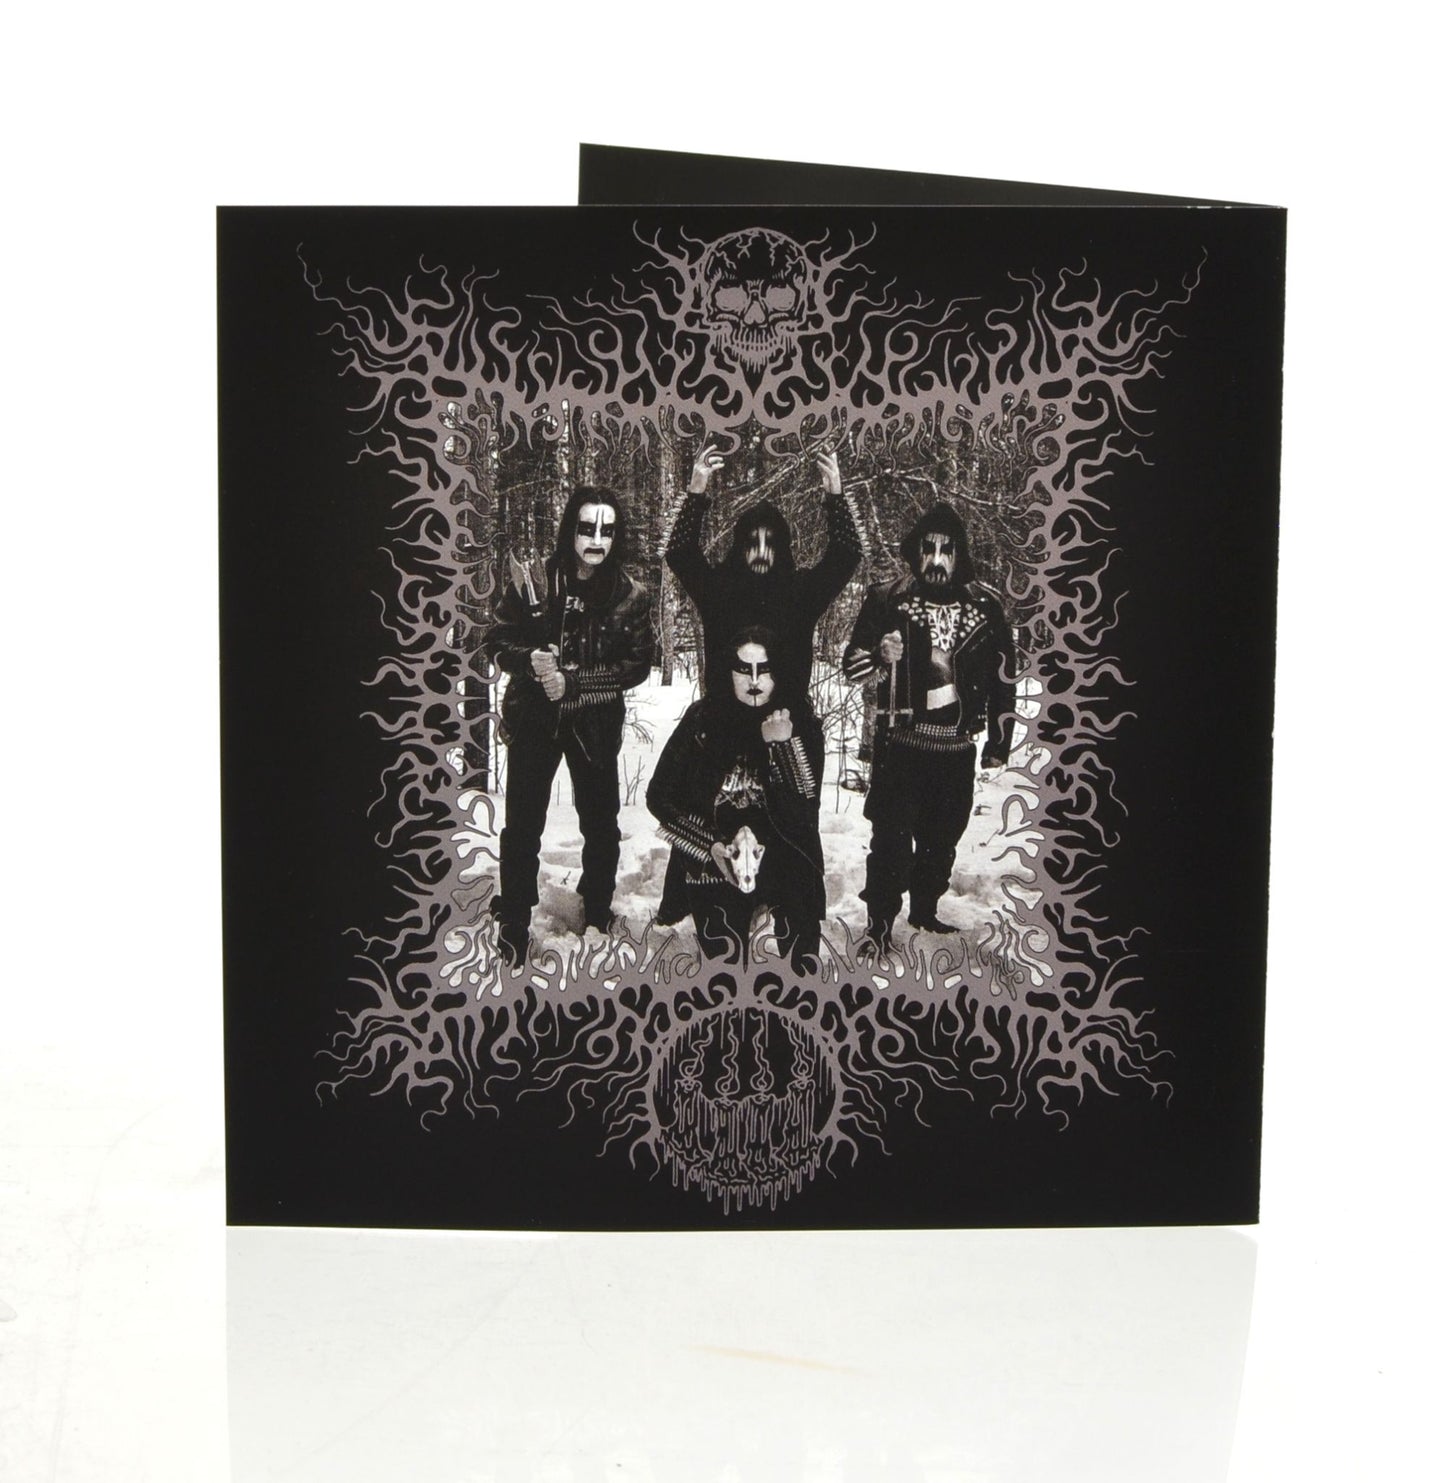 Nocturnal Departue - Clandestine Theurgy (CD) - Black Metal aus Kanada